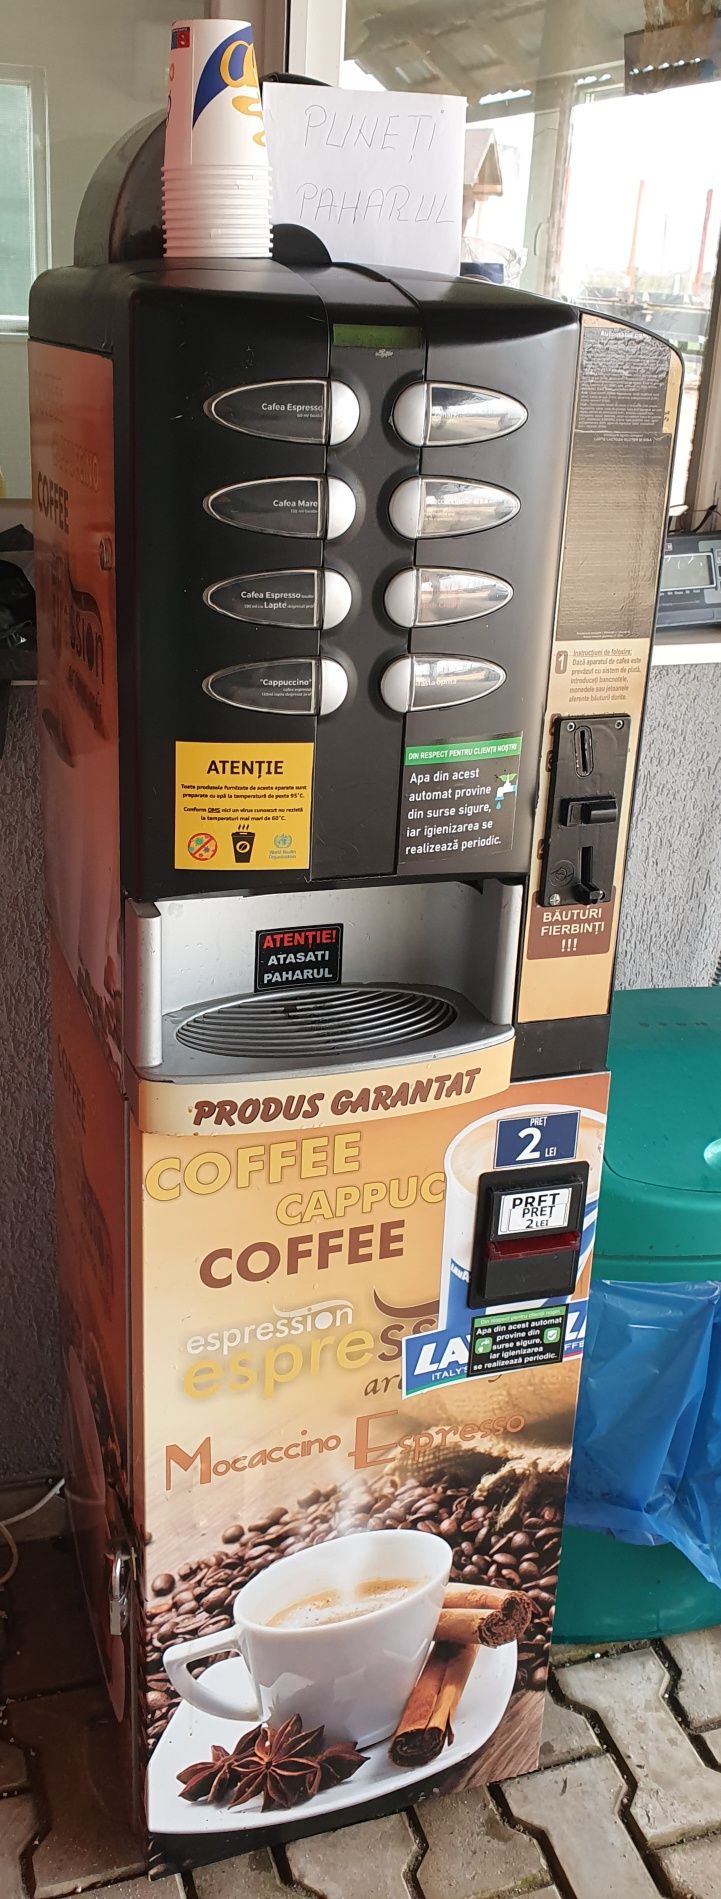 Automat aparat de cafea necta colibri c4 8 oz